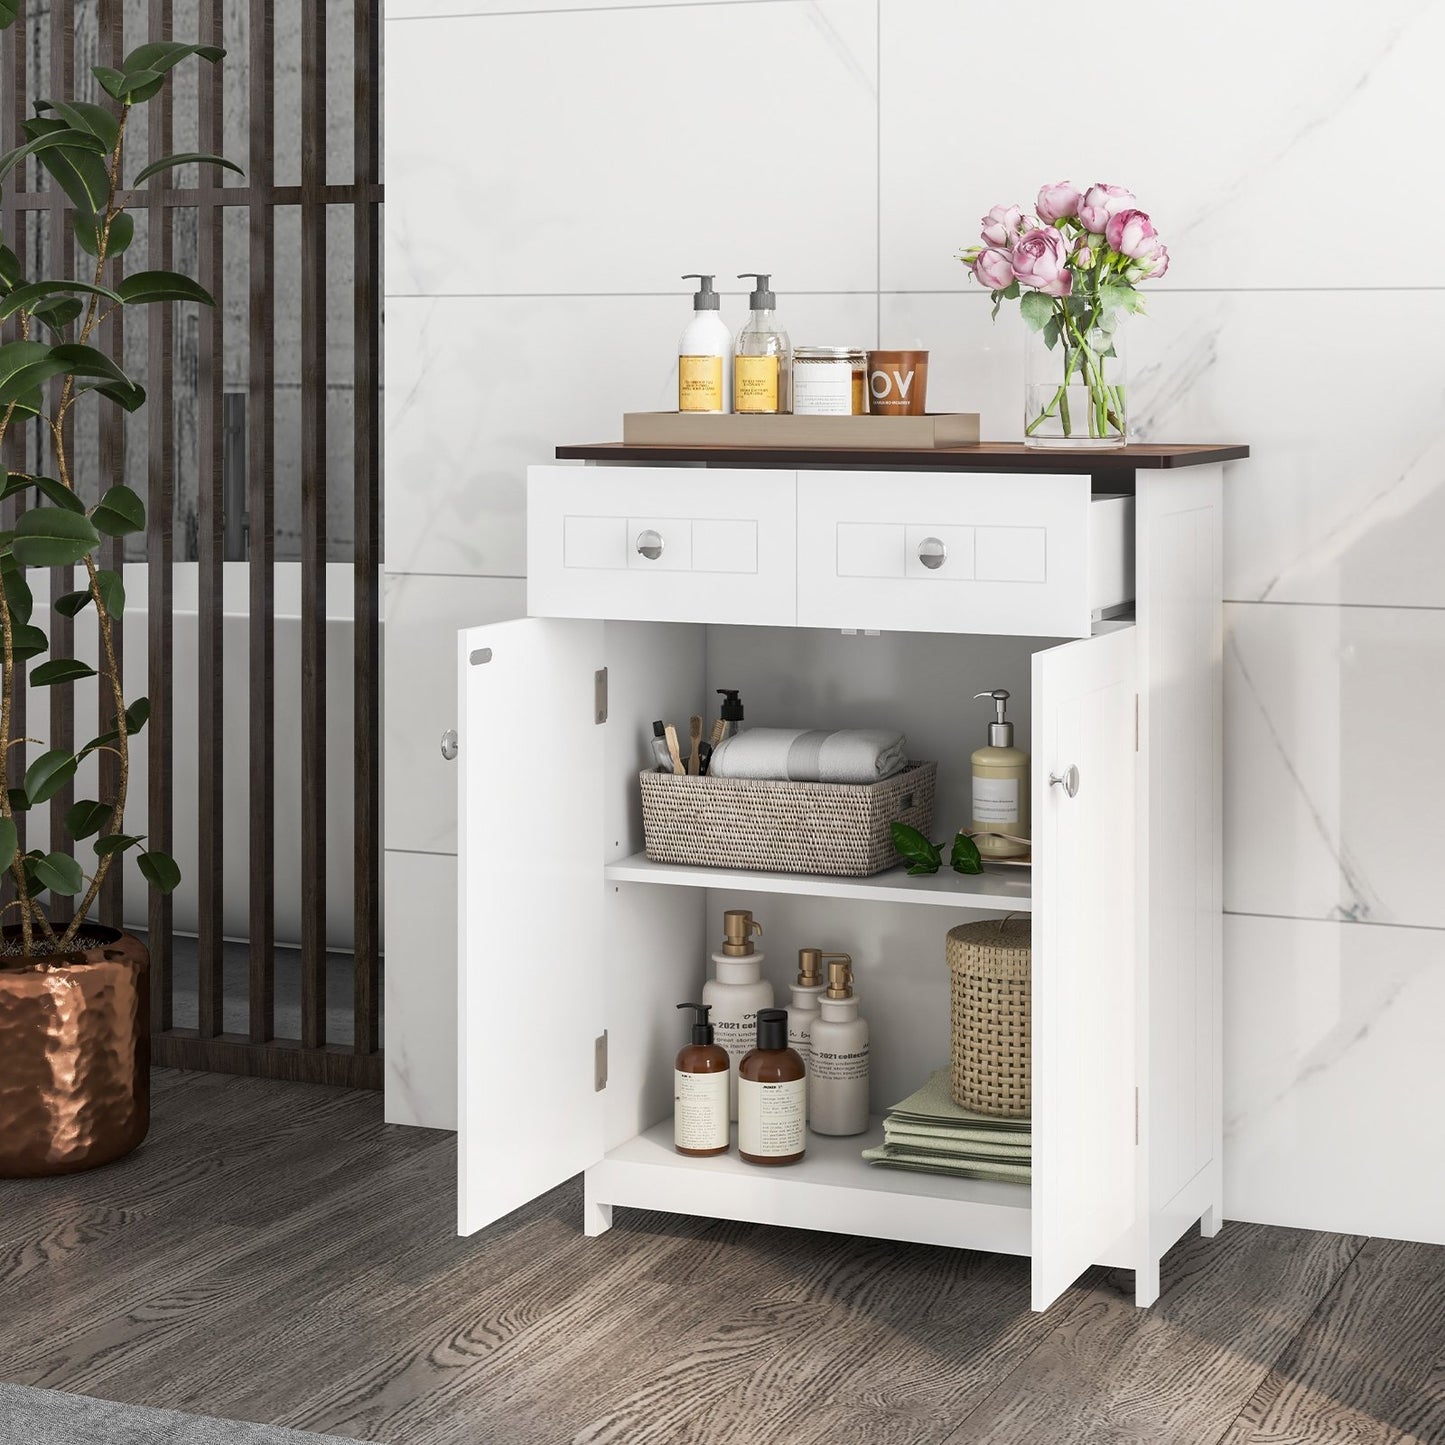 Freestanding Bathroom Floor Cabinet Storage Organizer with 2 Drawers, White